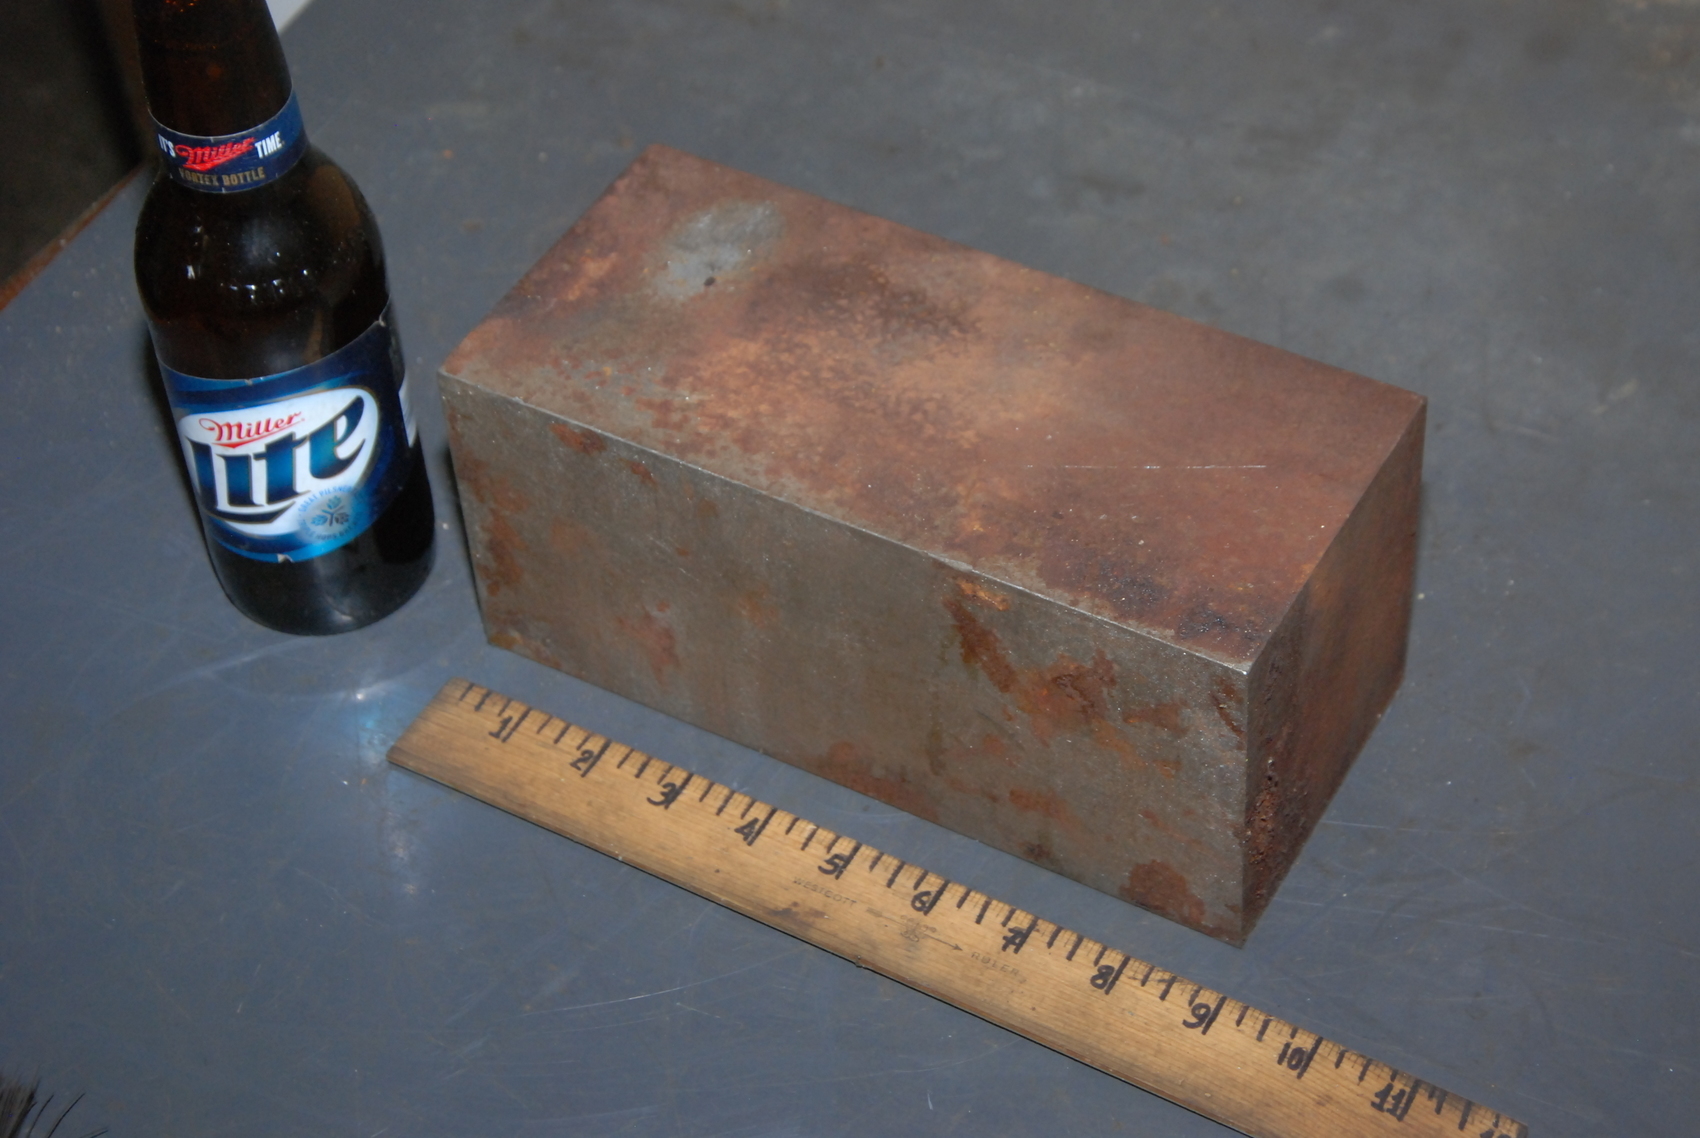 ONE steel Rectangular Bar for blacksmith anvil,41 lbs;8-7/8x4x4"